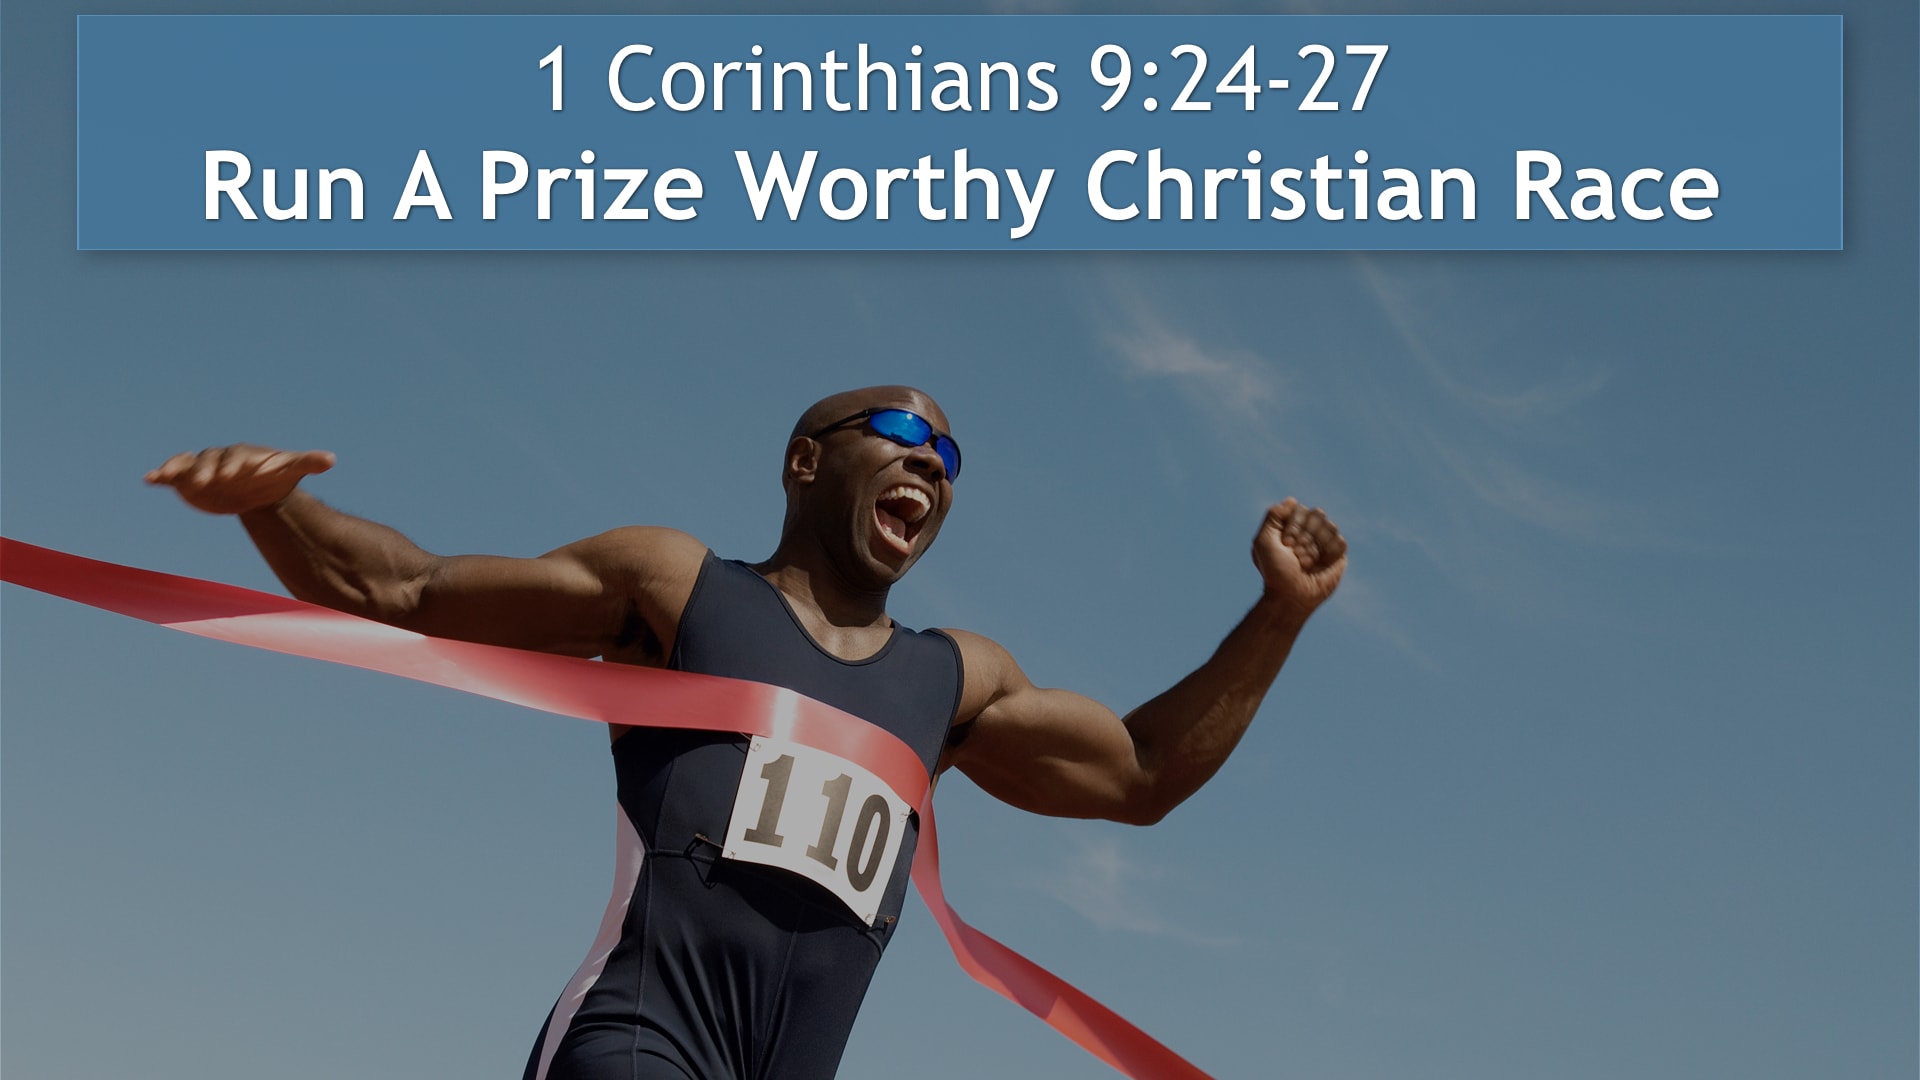 Jerry Simmons teaching 1 Corinthians 9:24-27, Run A Prize Worthy Christian Race